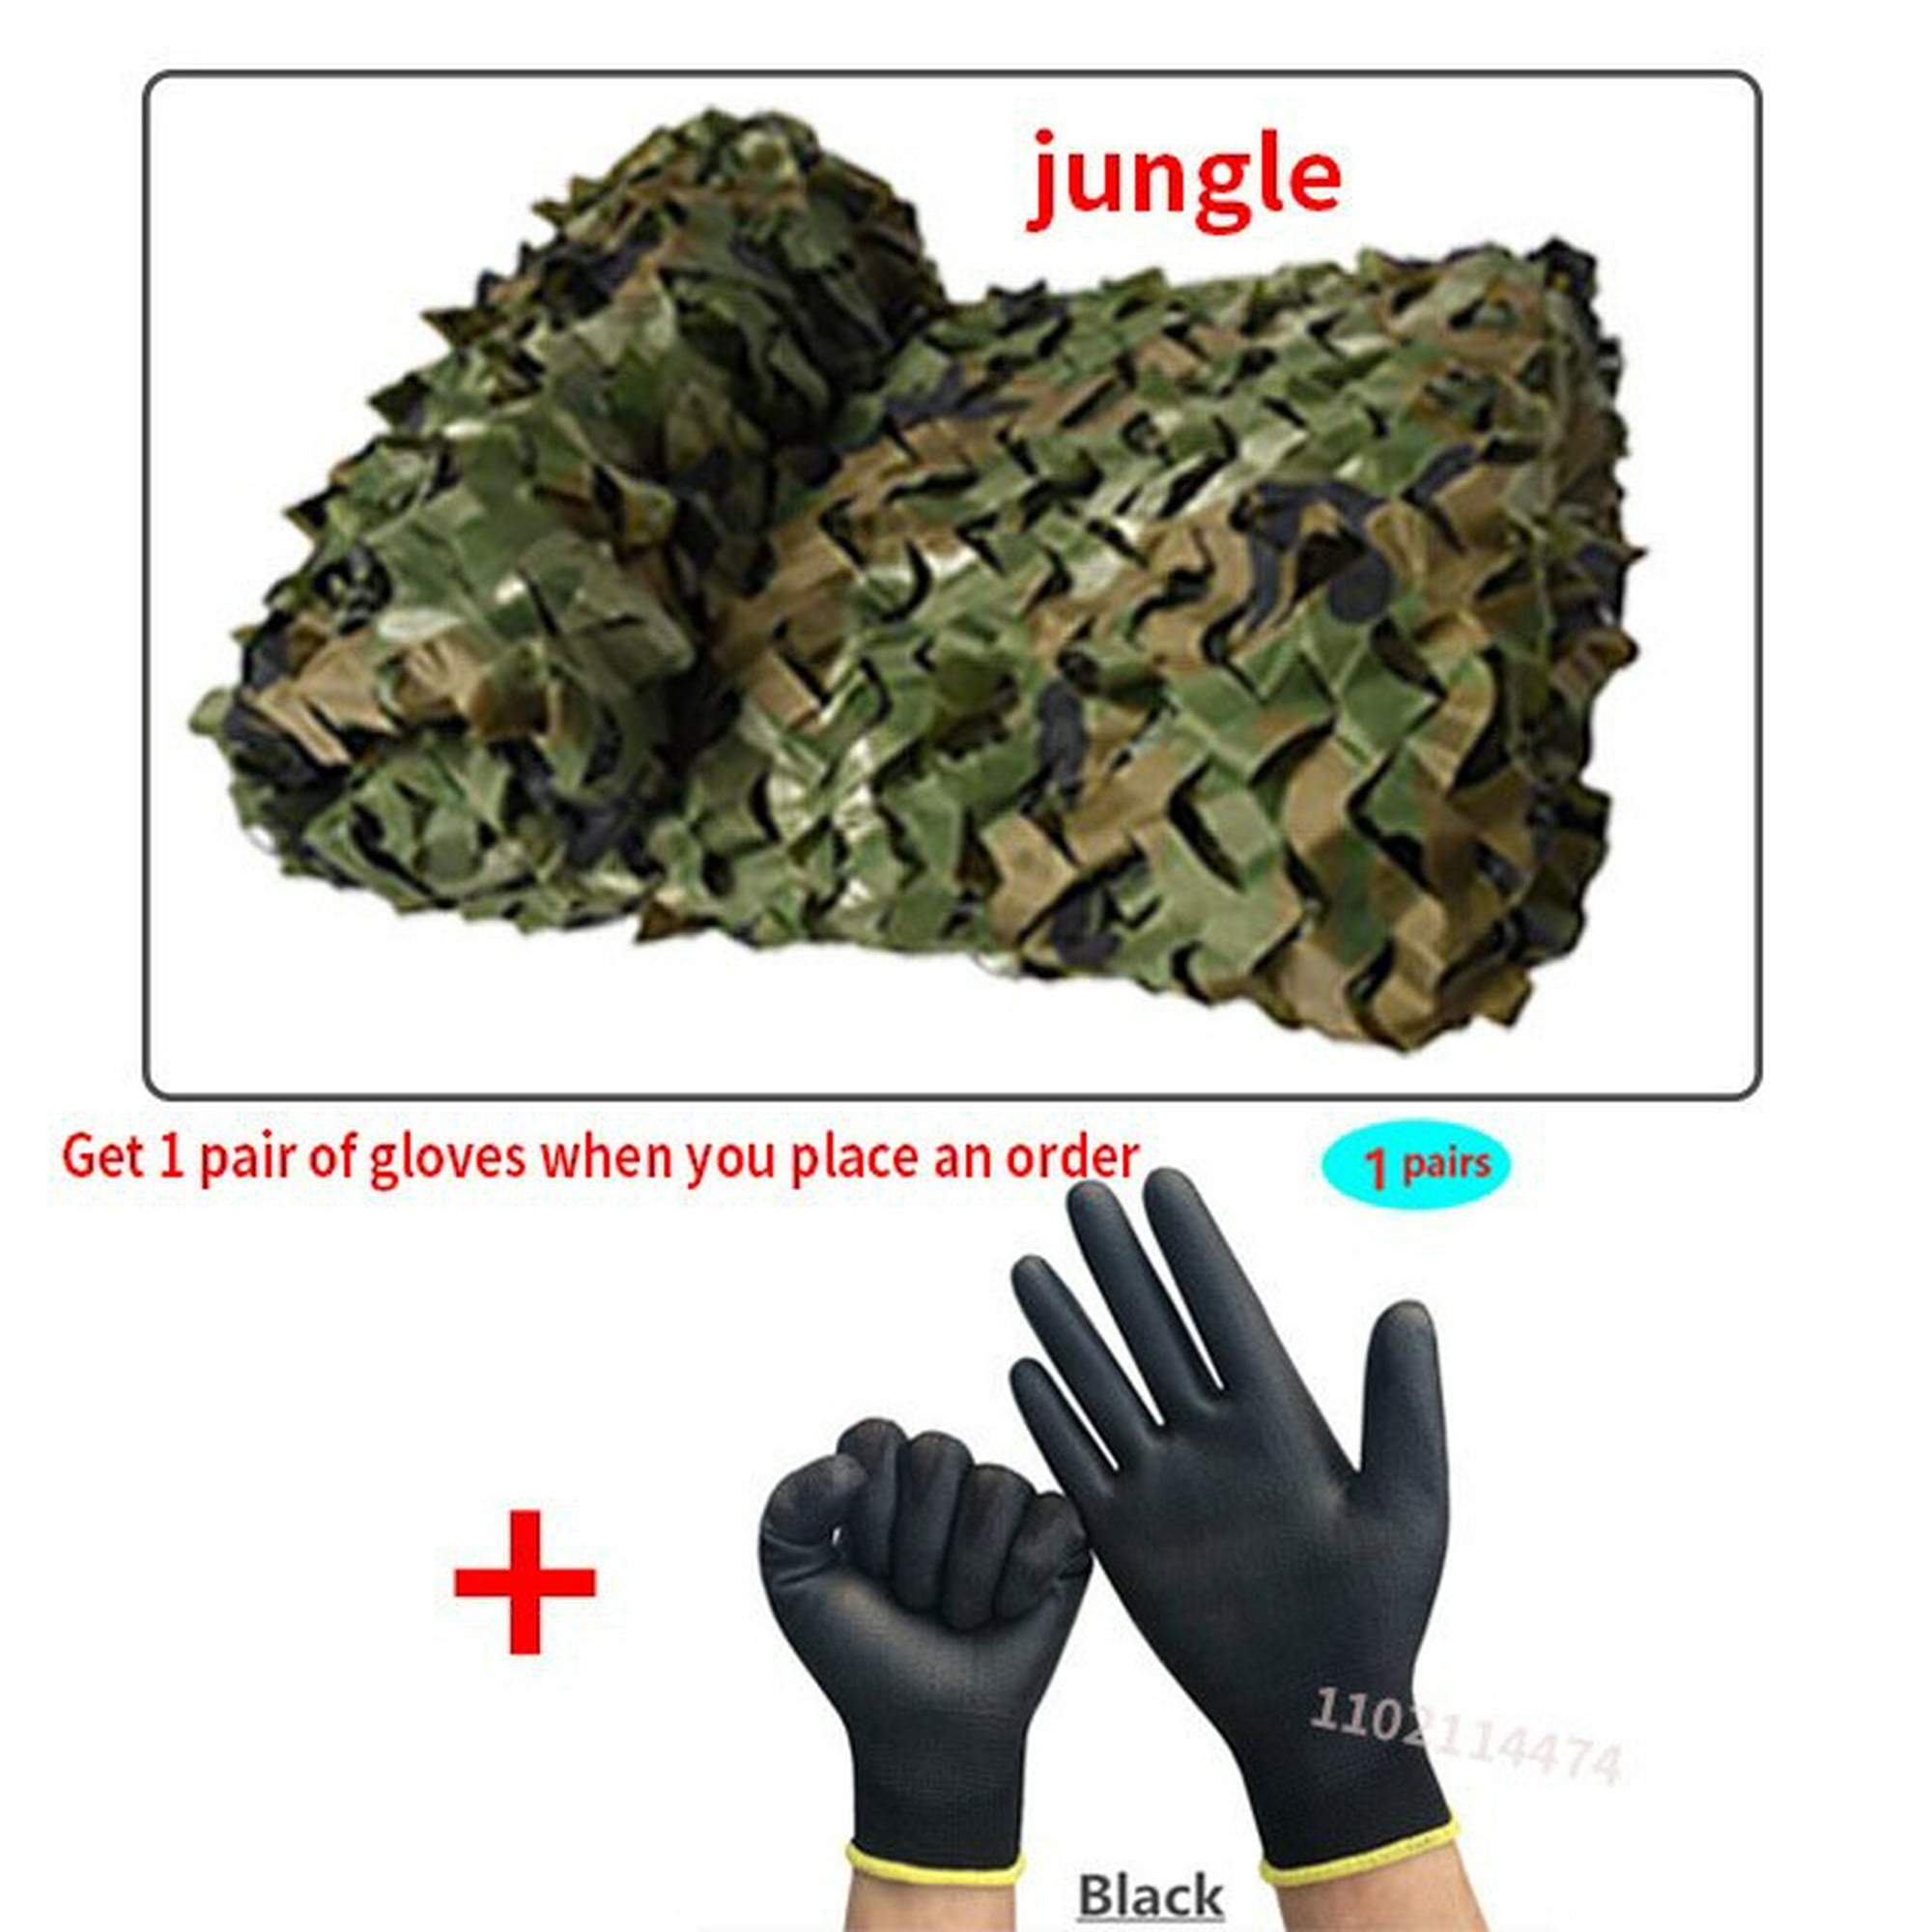 Comprar Red de camuflaje militar para jardín, uniforme militar